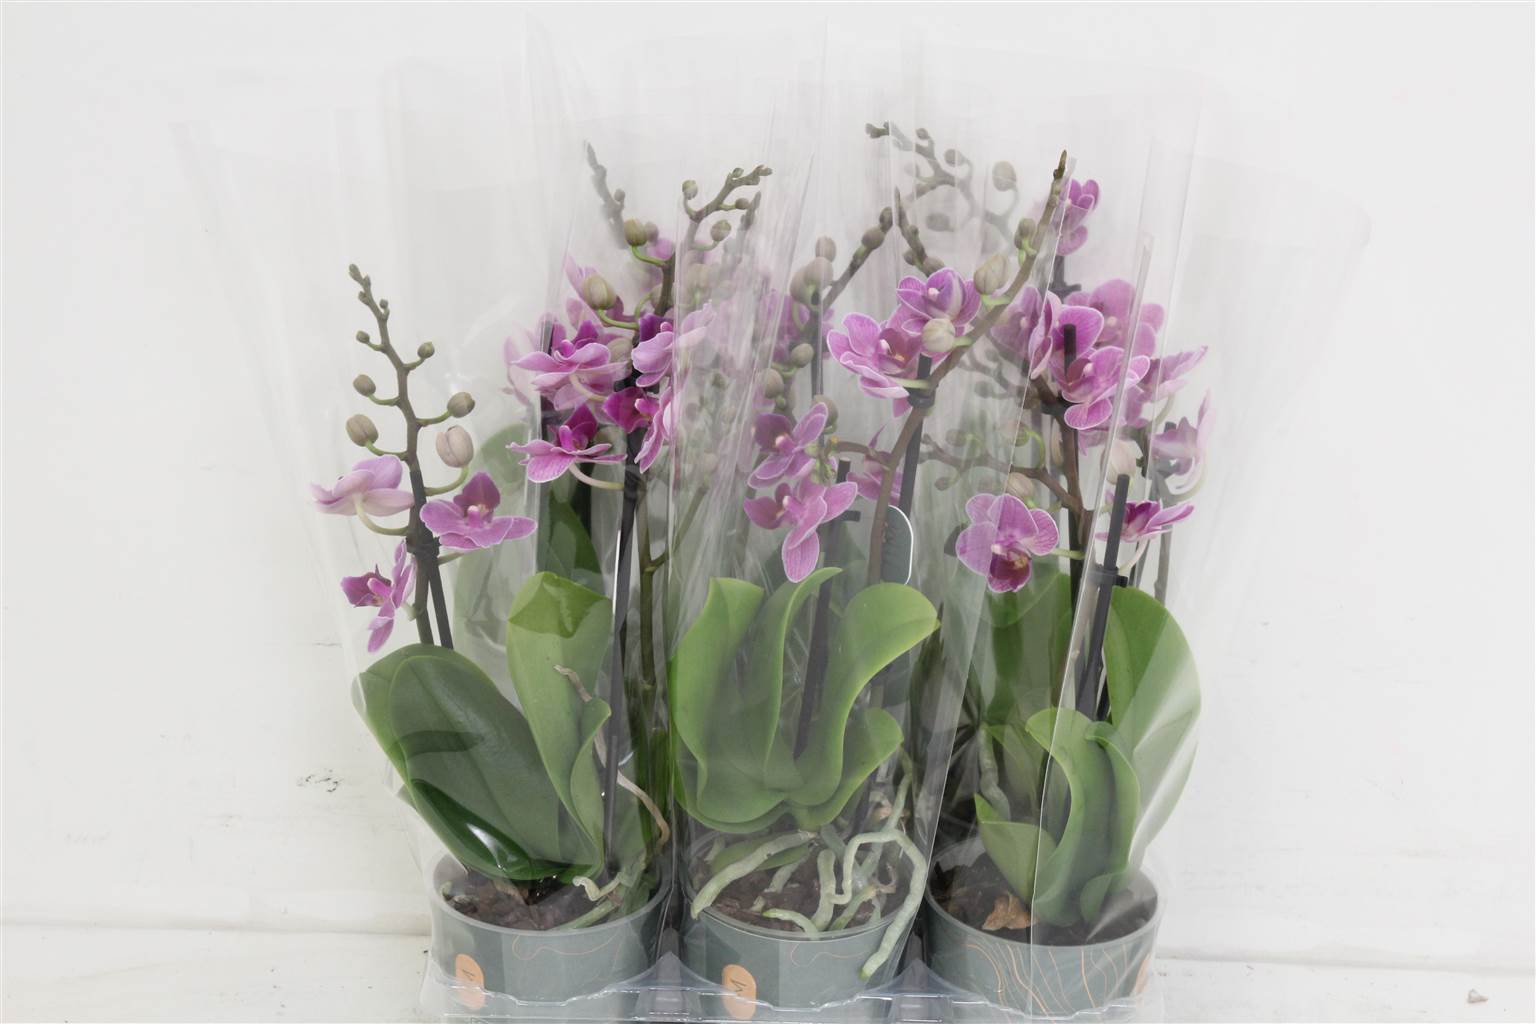 Фаленопсис мультифлора Фиалка Королева 2 стебля ( Phalaenopsis Multi-flora Violet Queen 2 stem ) W 9